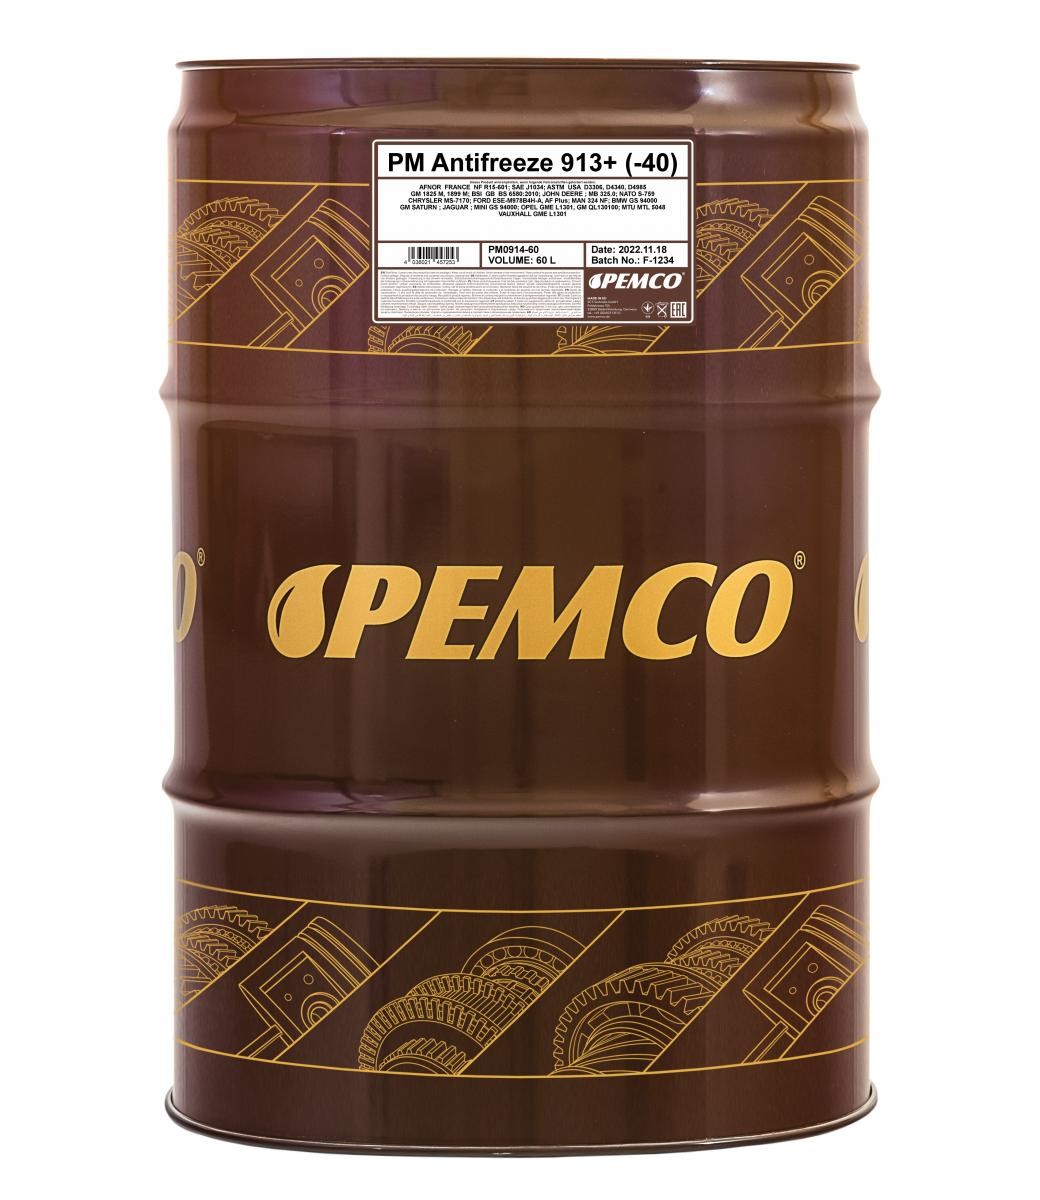 PEMCO Antifreeze 913+, -40 PM0914-60 Antifreeze G13 yellow, 60l